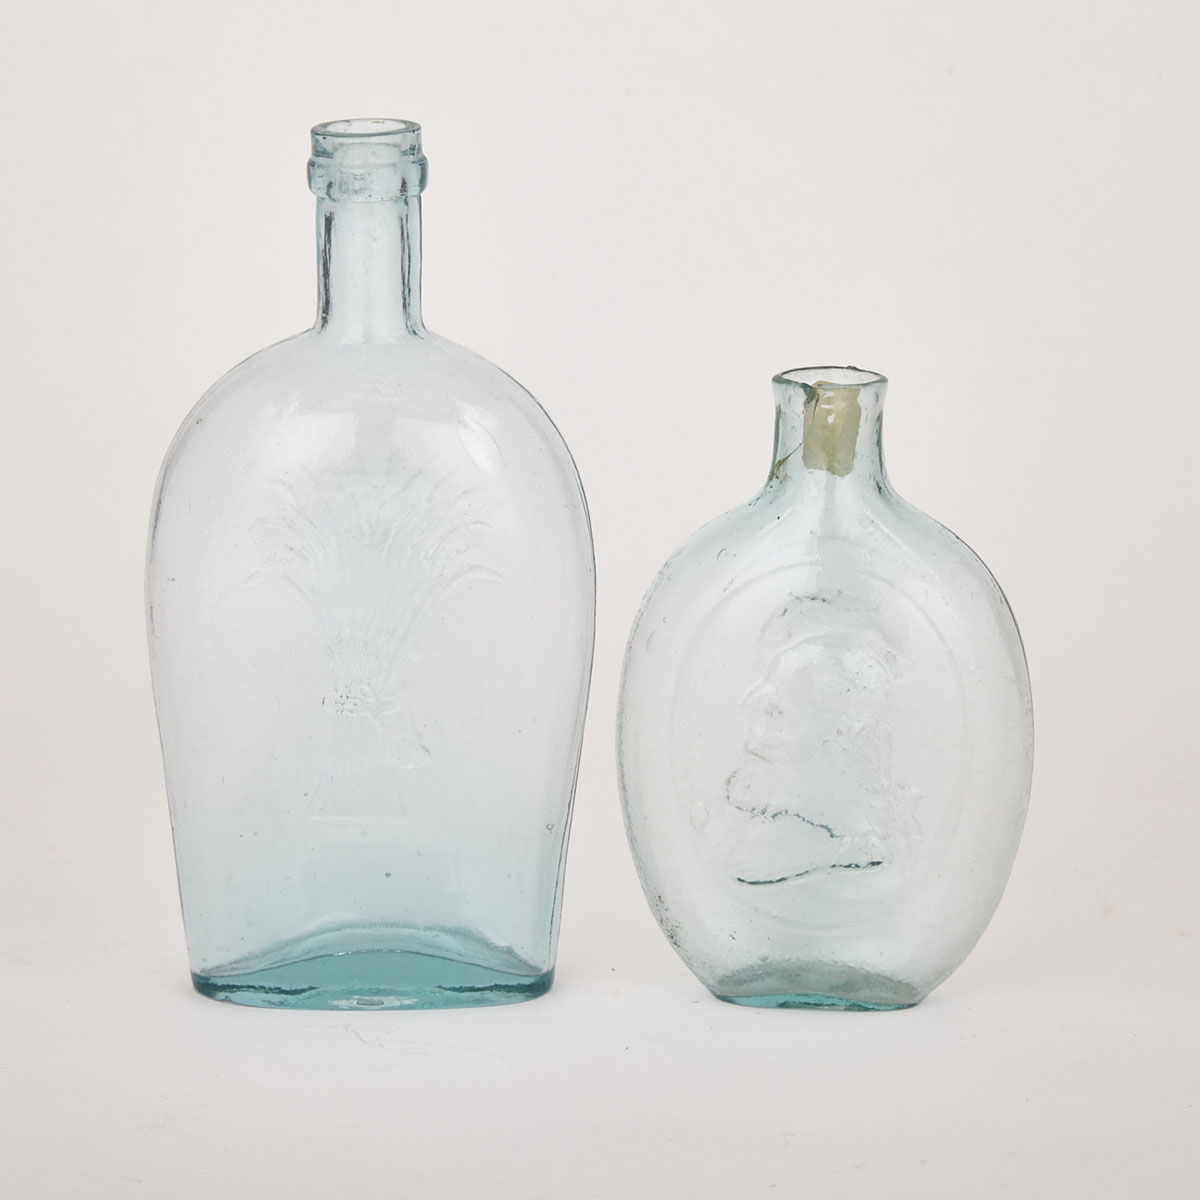 Washington/Taylor Portrait Flask, Dyottville Glass Works, Philadelphia, Penn., and a Sheaf of Wheat Flask, 19th century